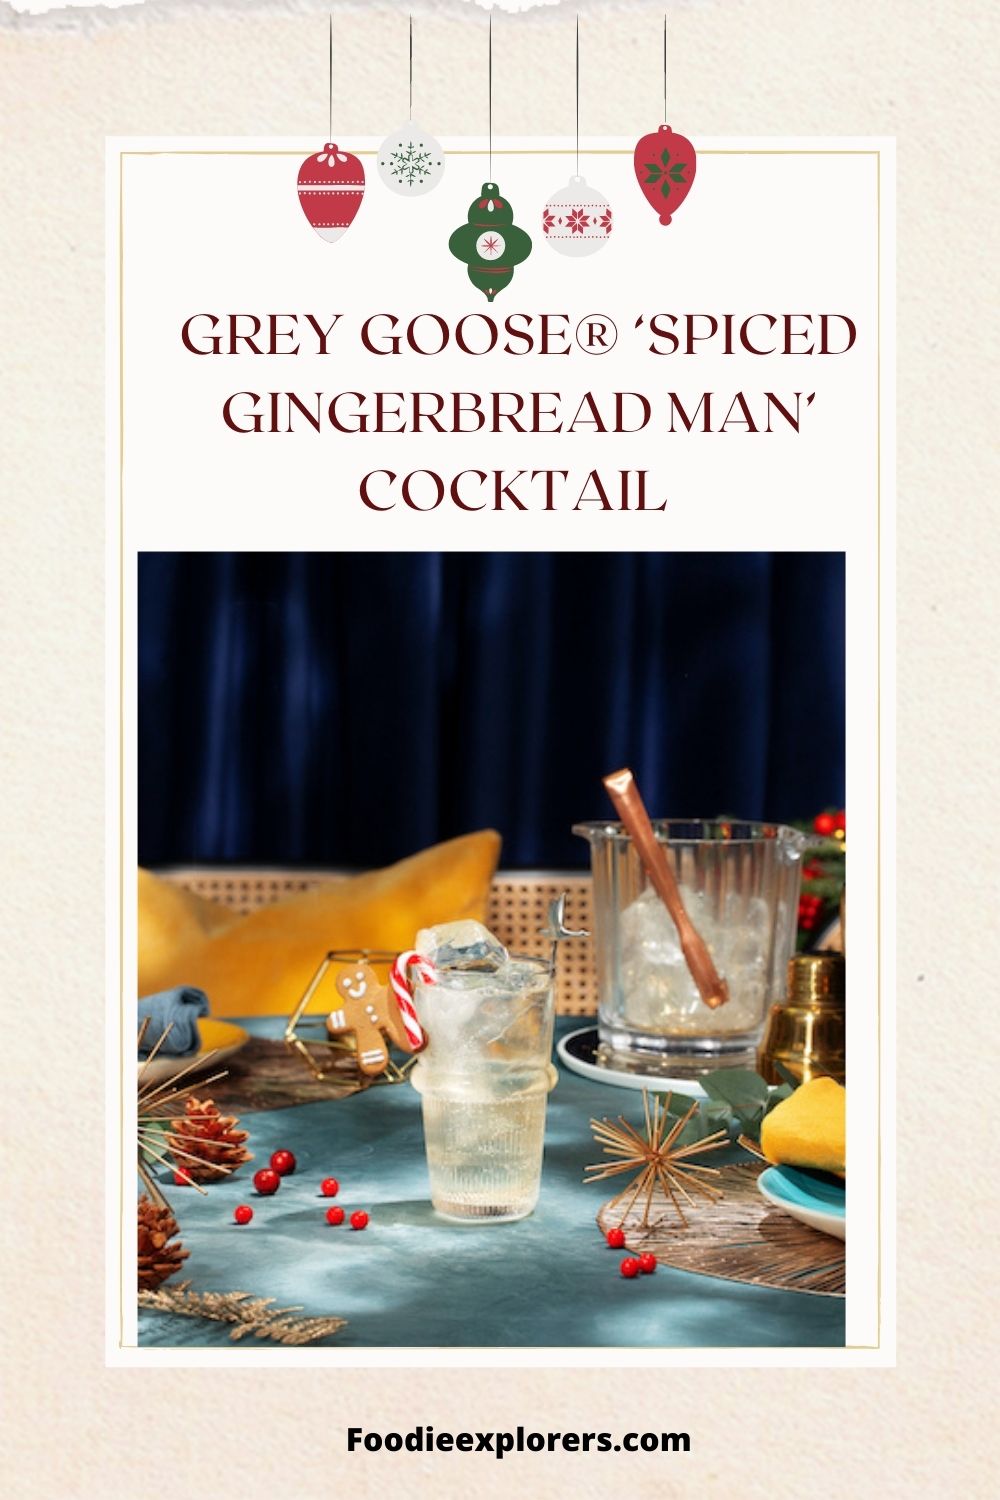 GREY GOOSE® ‘Spiced Gingerbread Man’